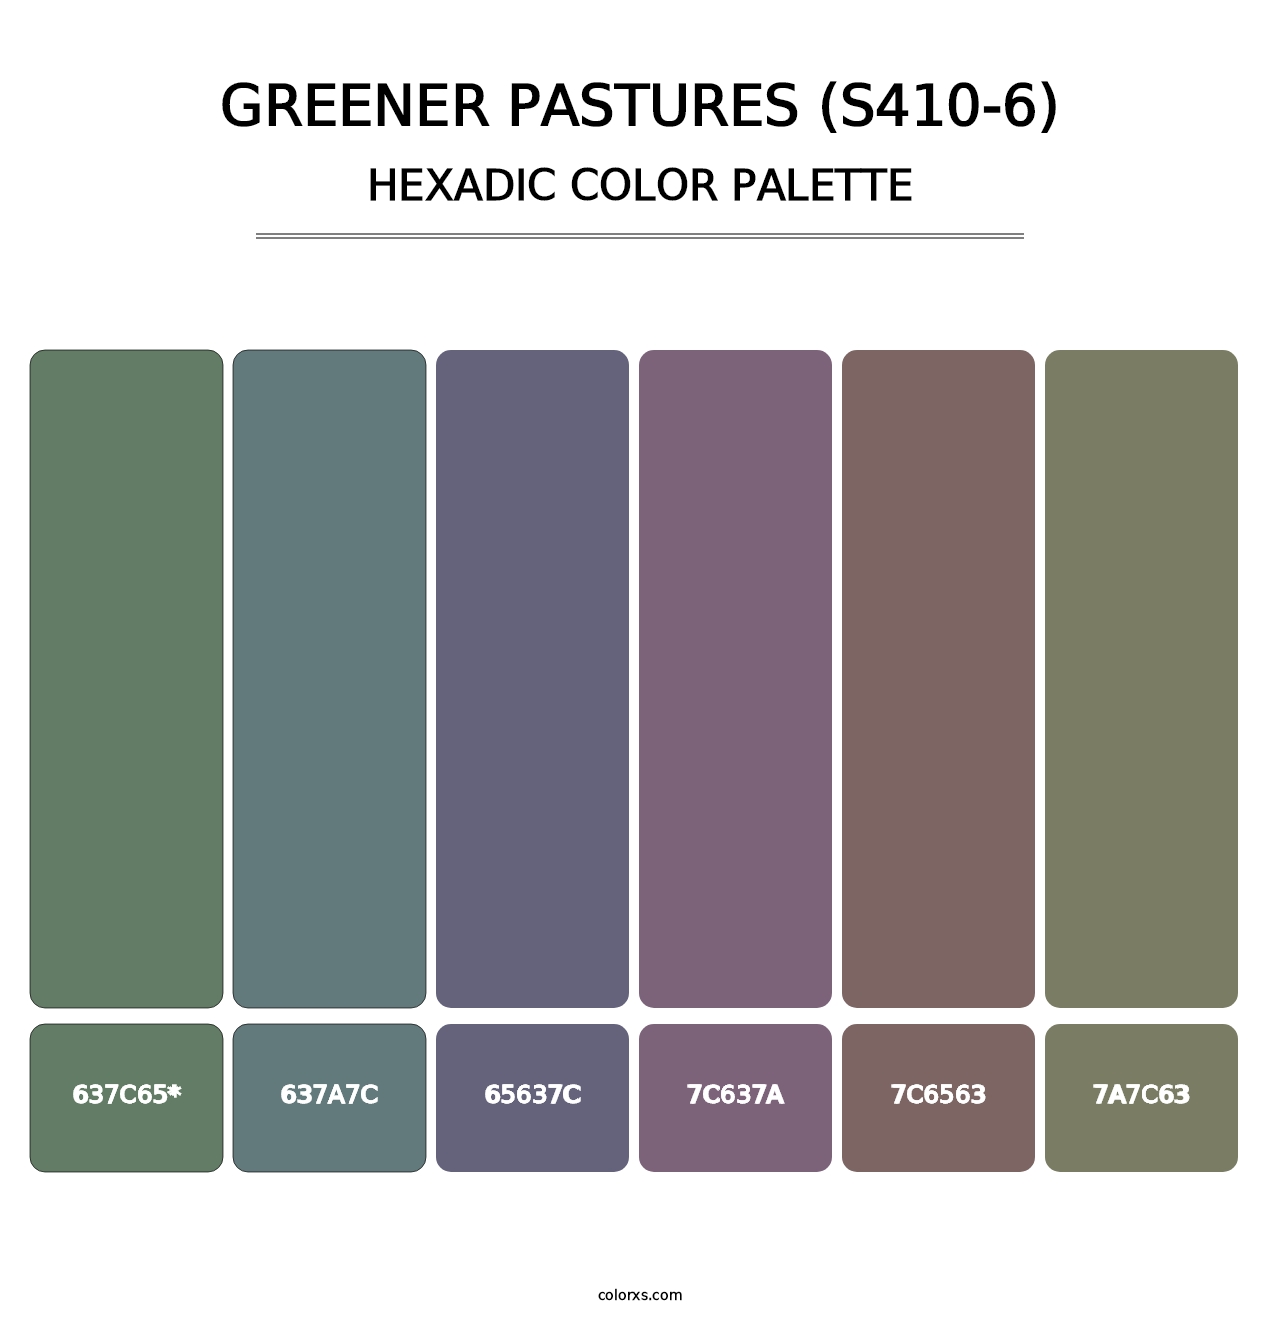 Greener Pastures (S410-6) - Hexadic Color Palette